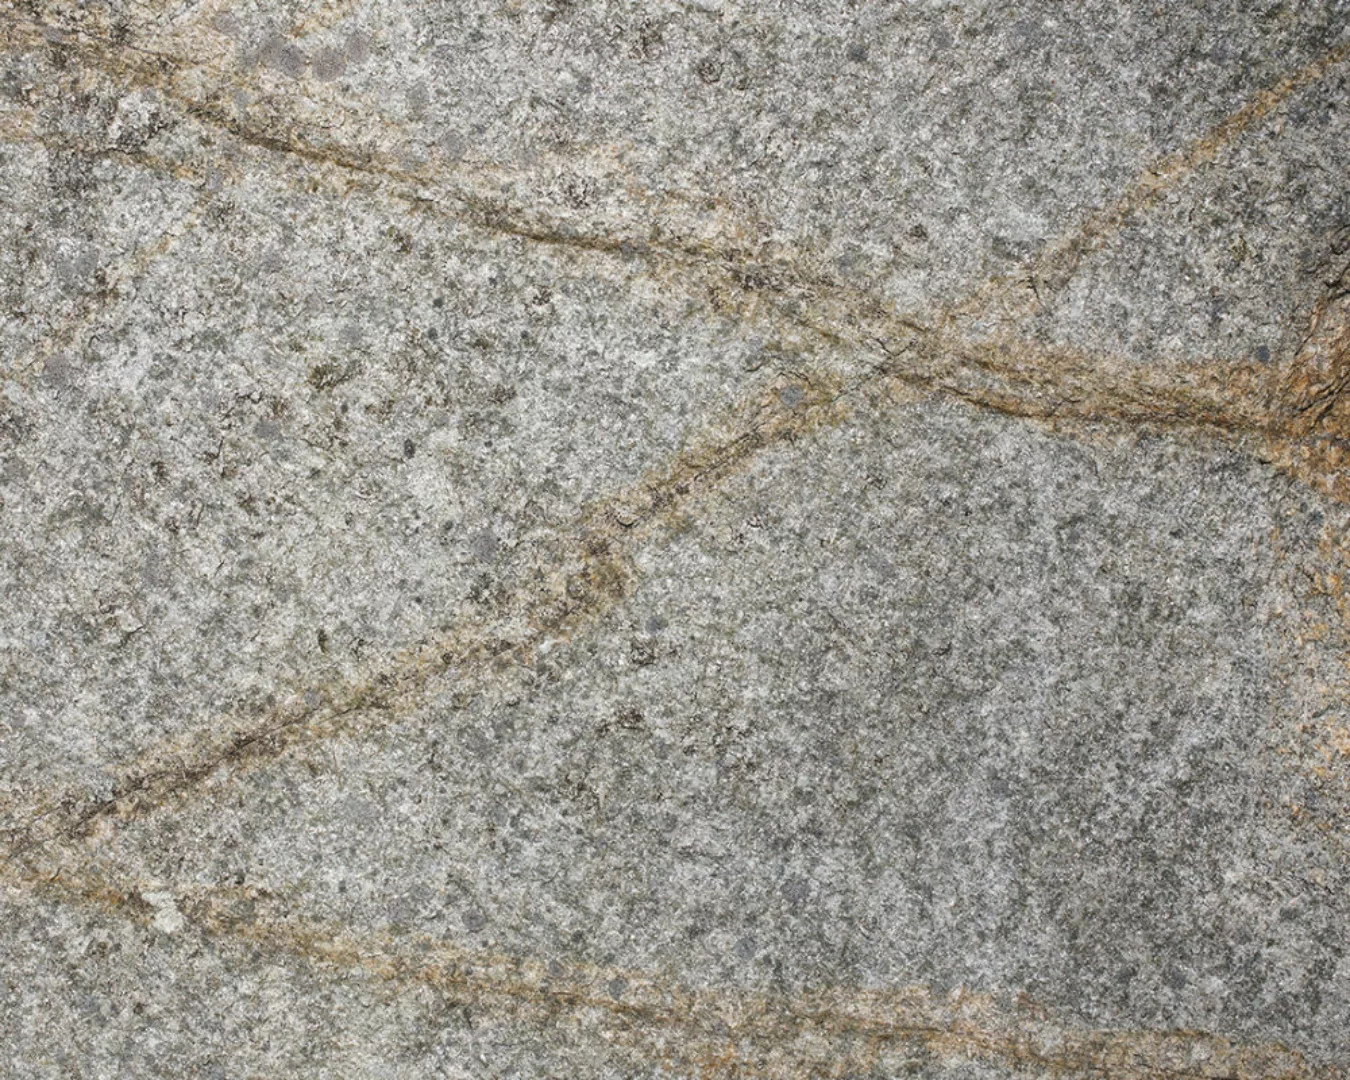 Fototapete "Stone" 3,50x2,55 m / Glattvlies Perlmutt günstig online kaufen